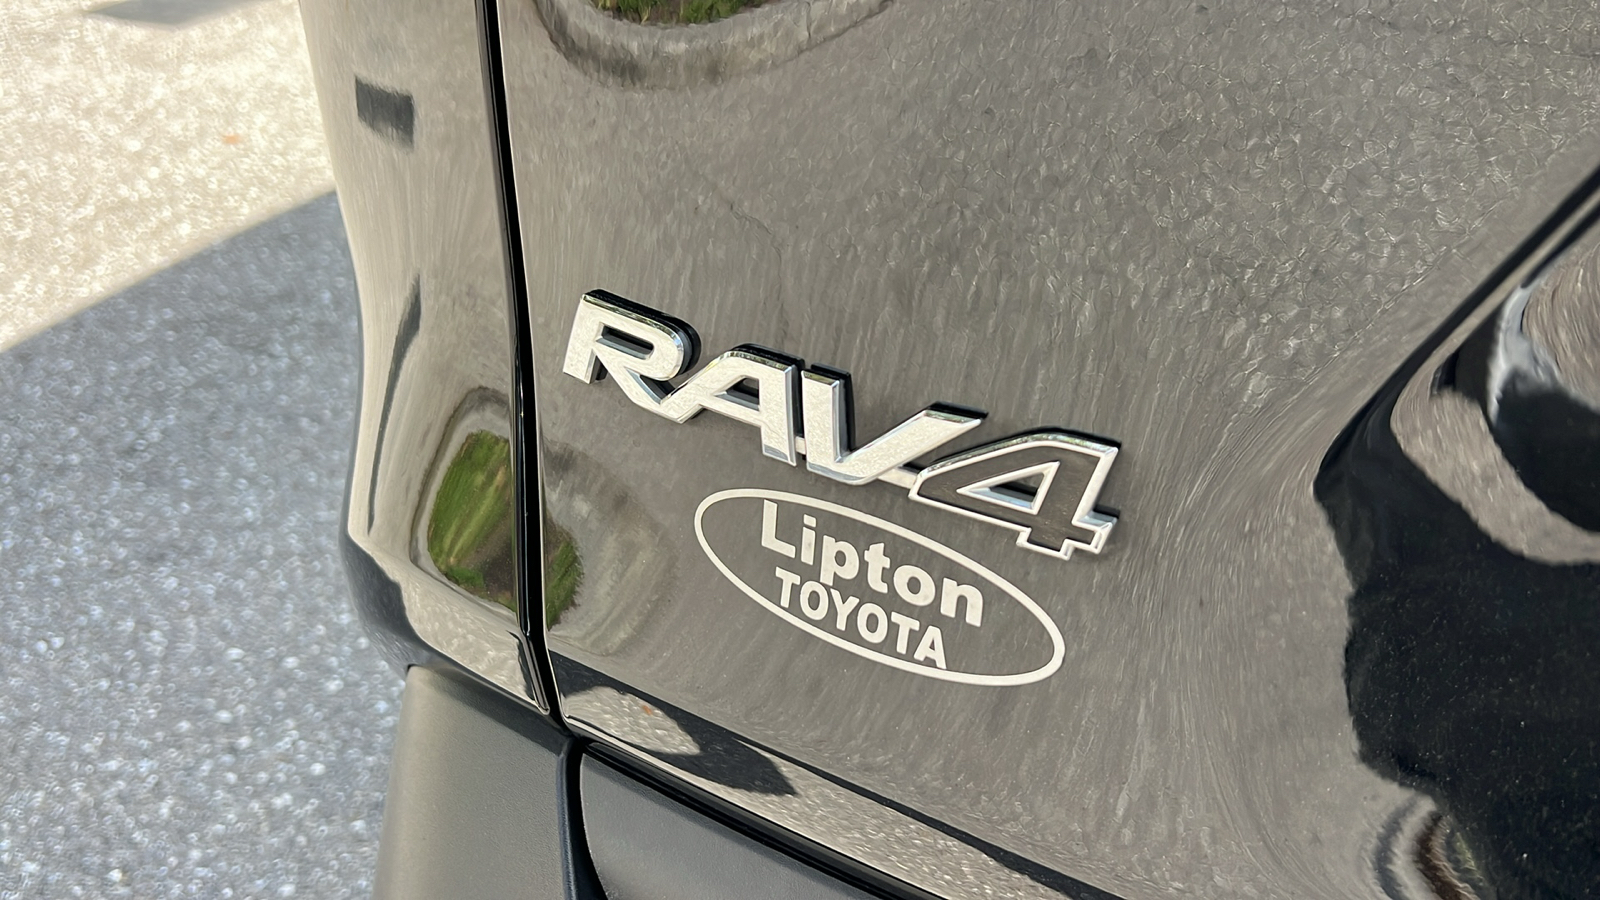 2022 Toyota RAV4 XLE 7